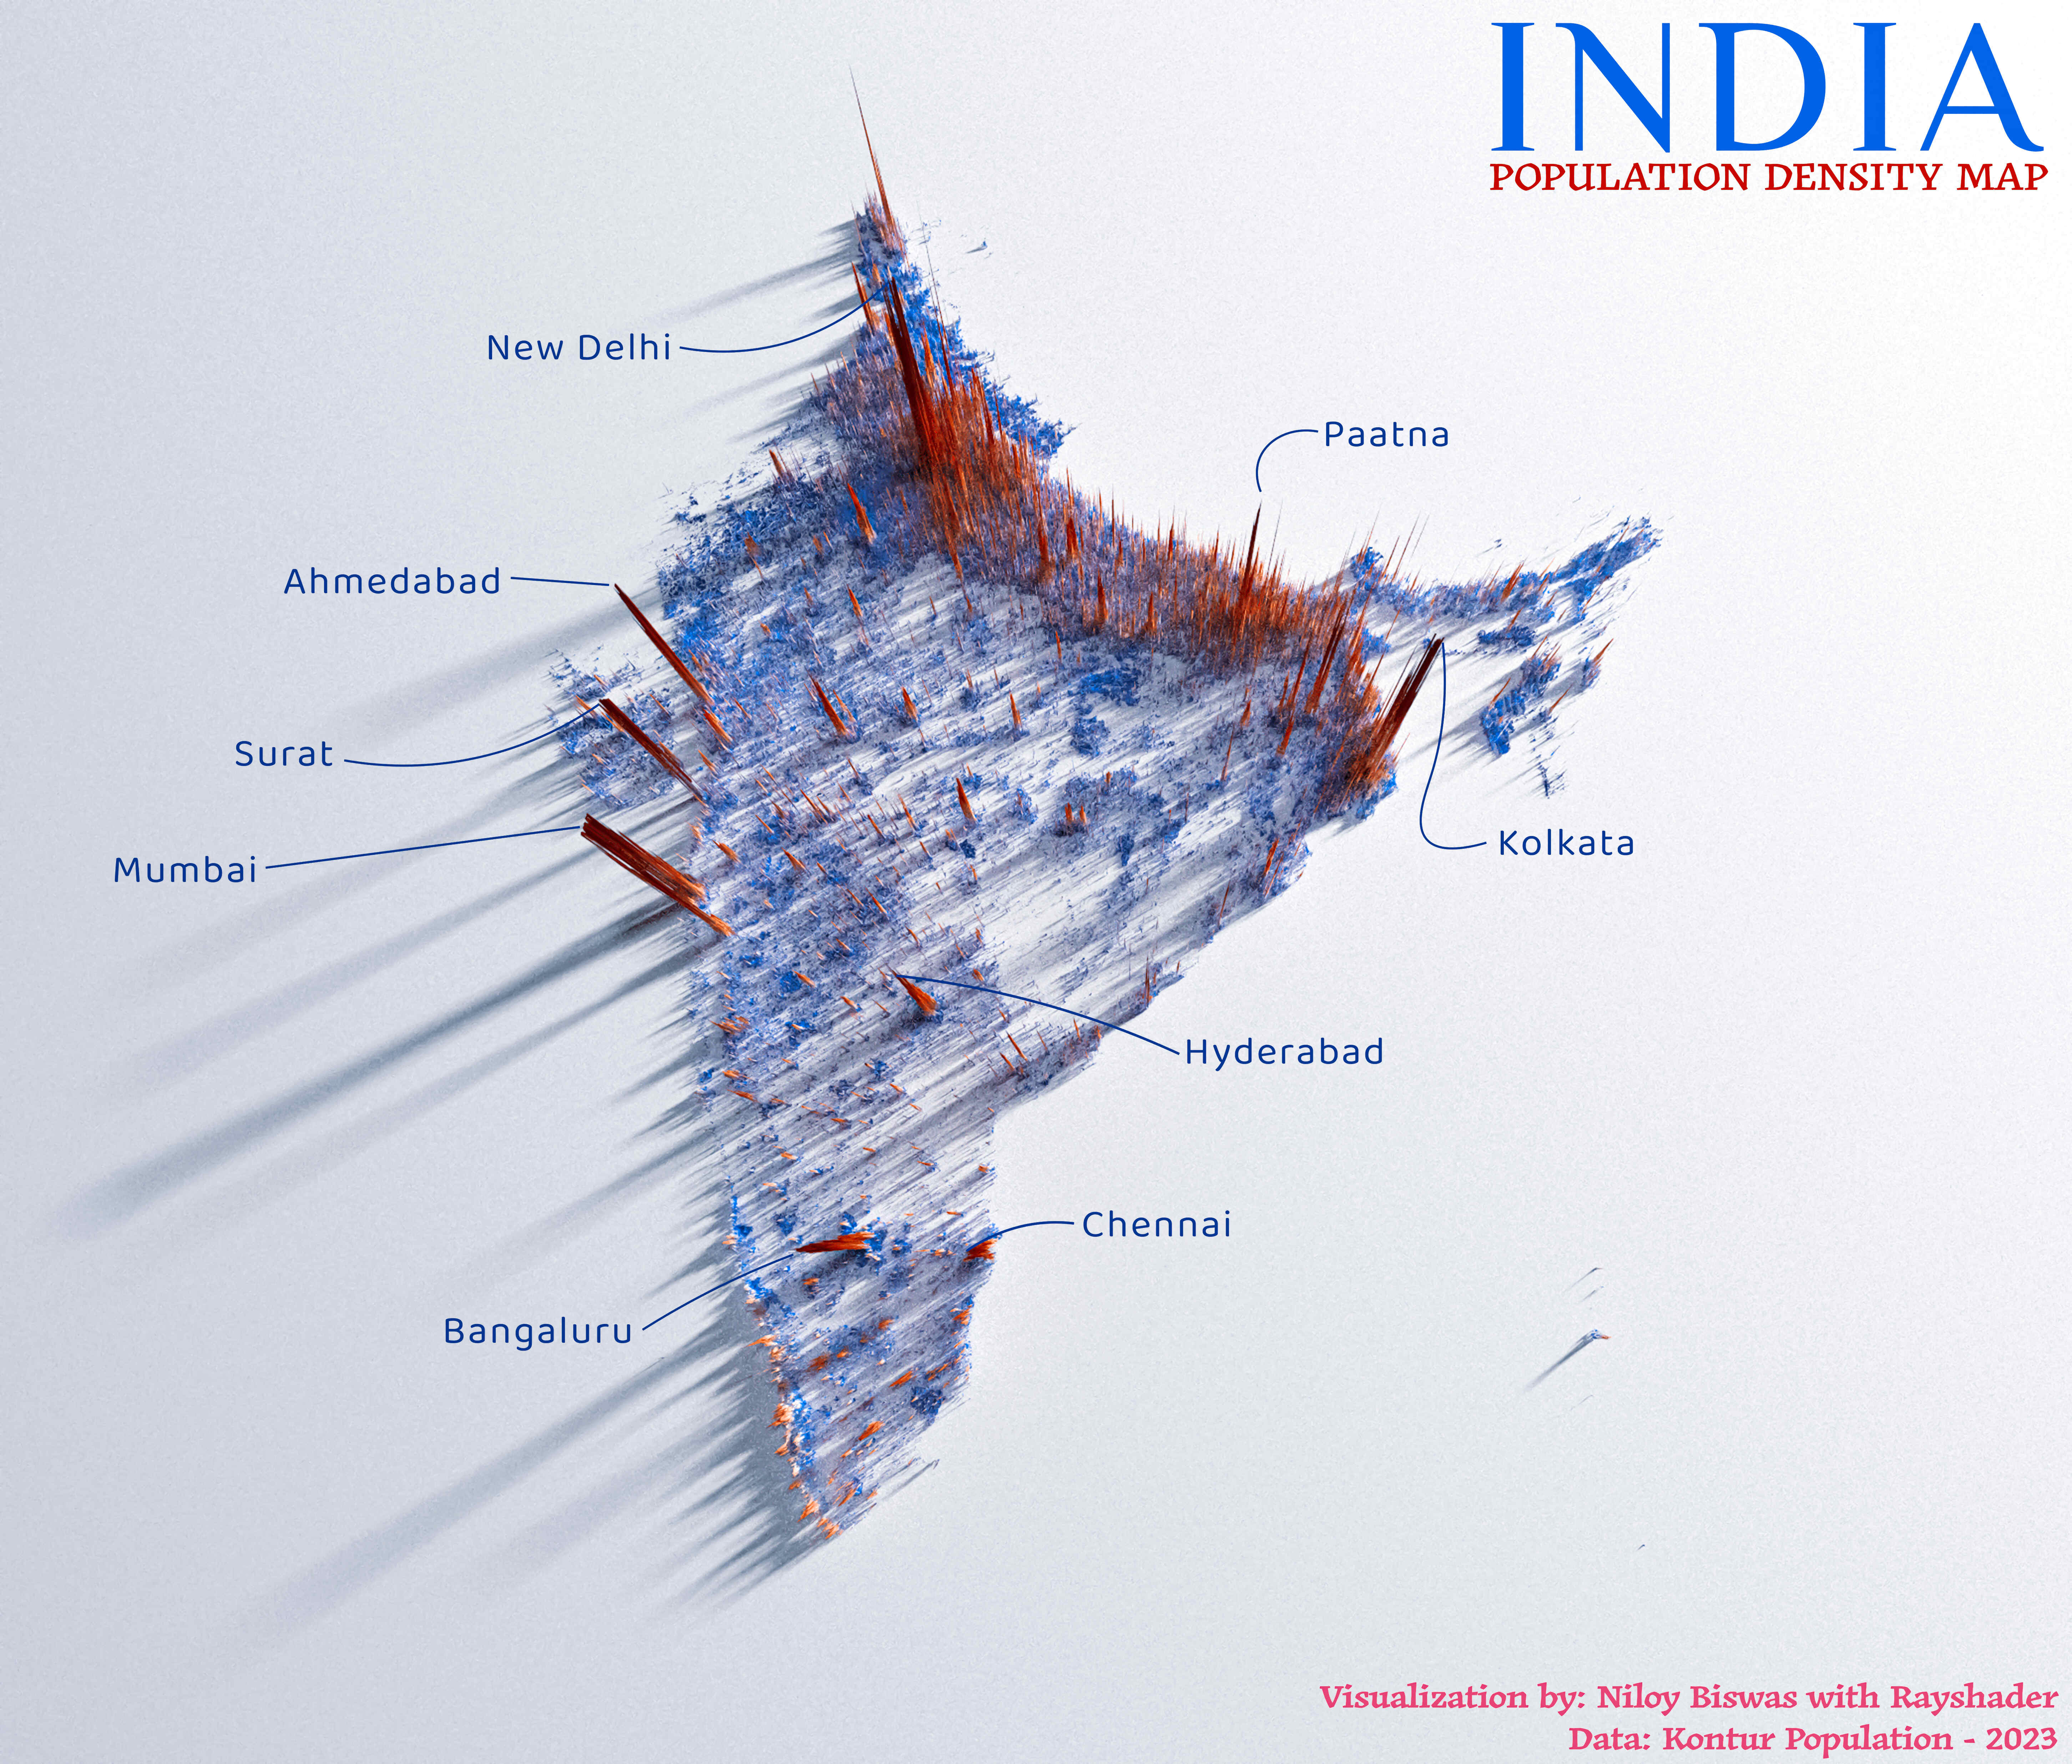 India population density map